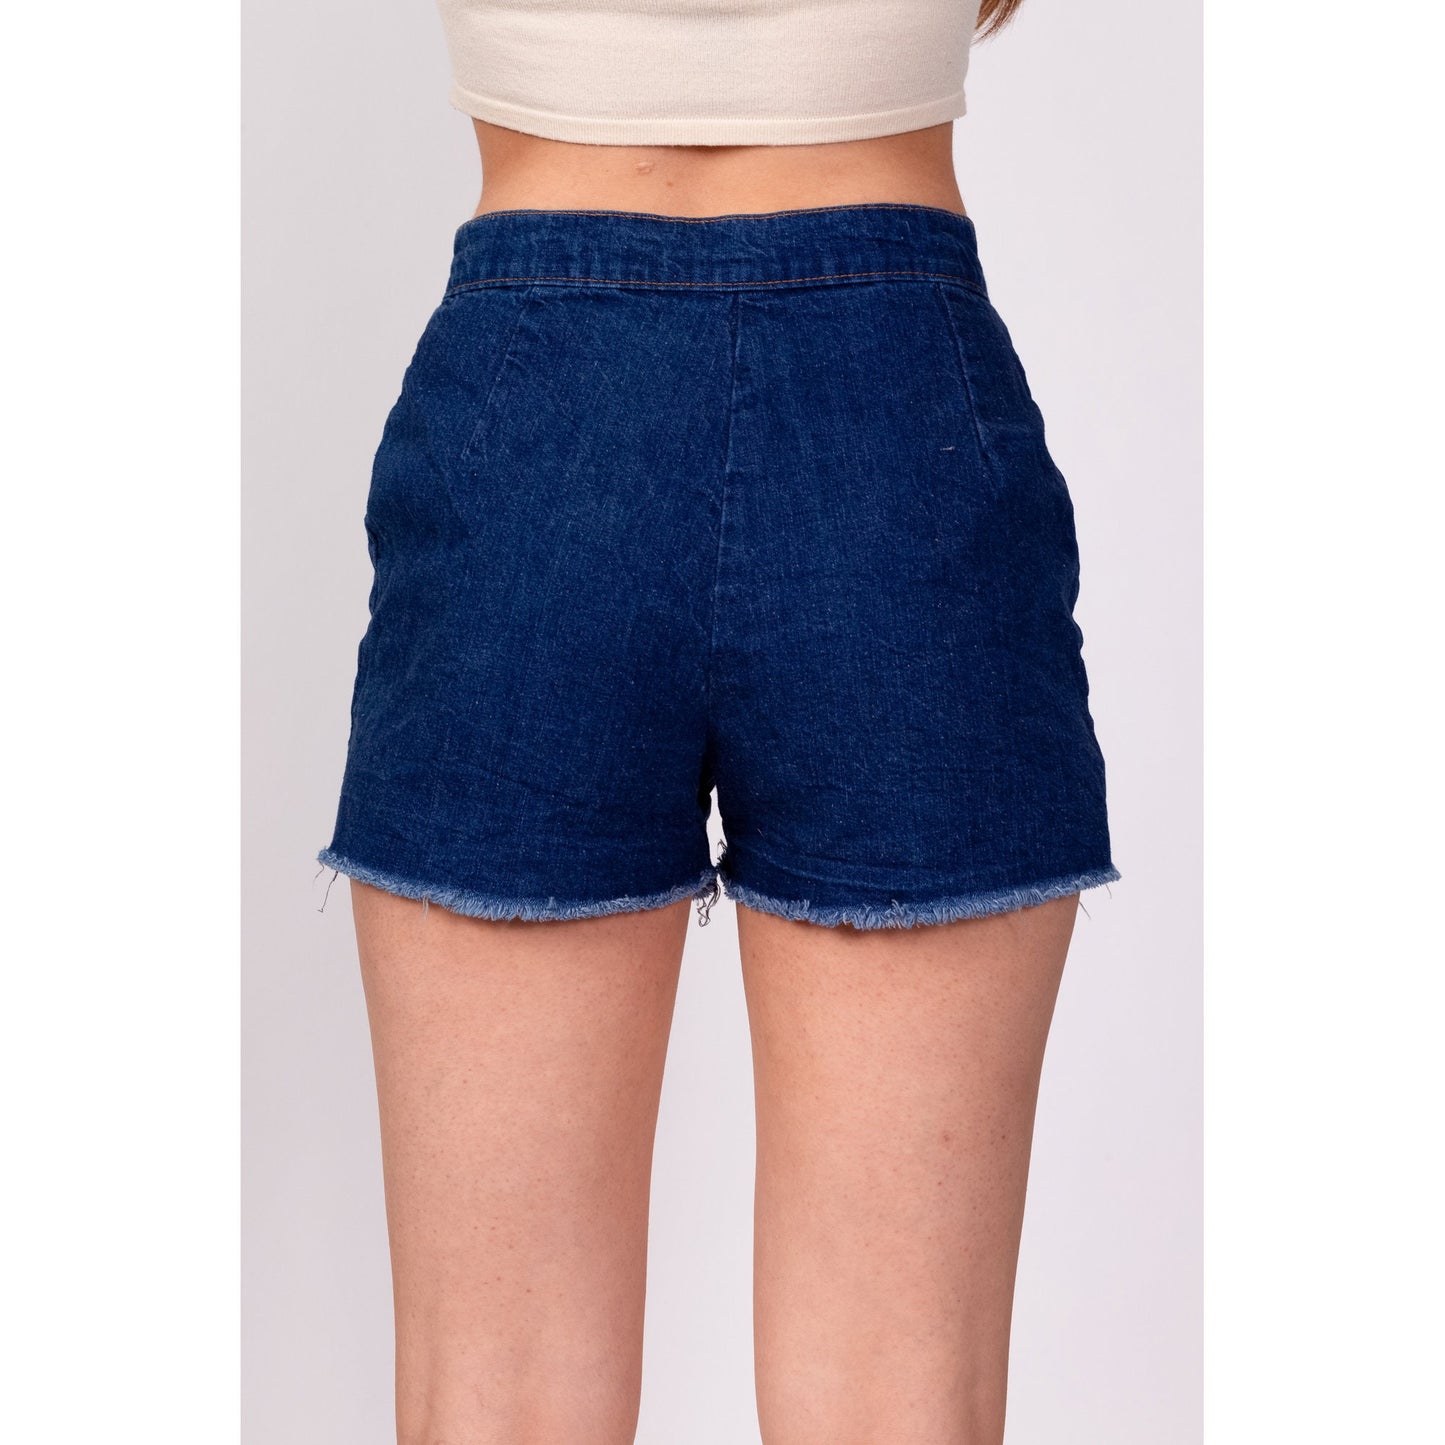 70s Zippered Dark Wash Jean Shorts - Petite Extra Small, 24" 